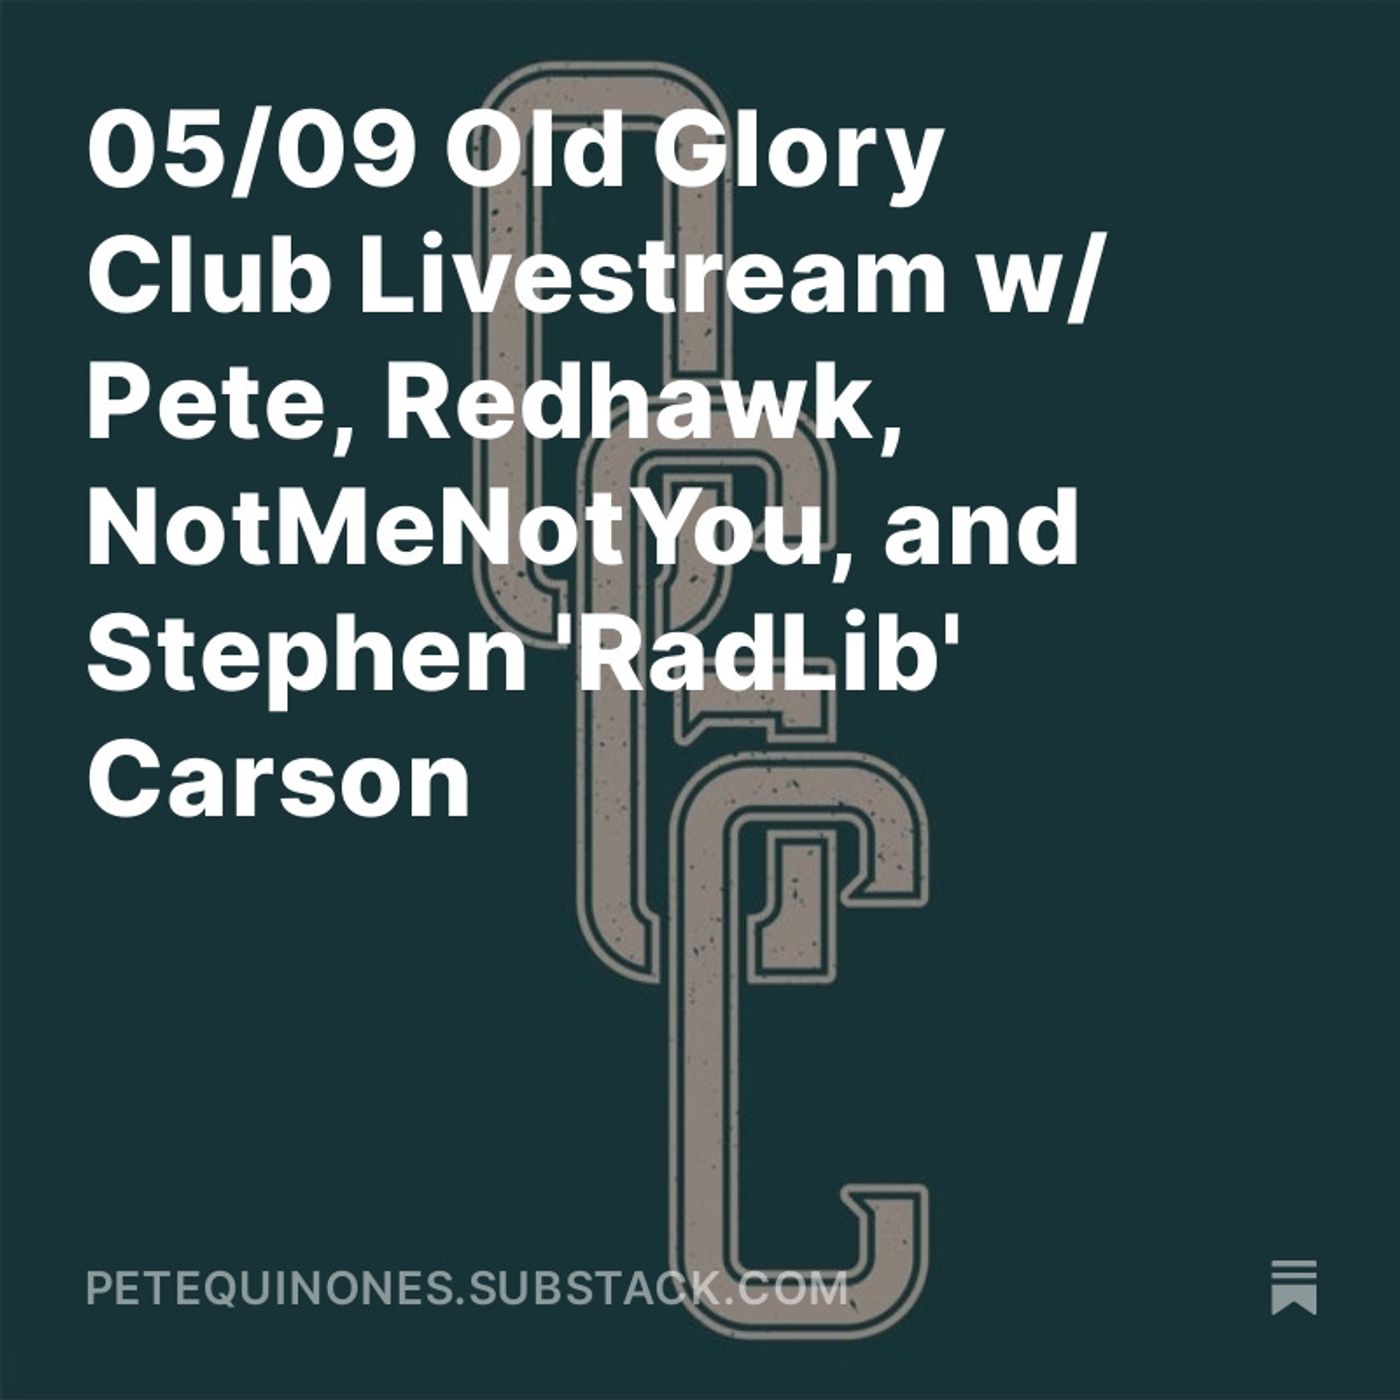 05/09 Old Glory Club Livestream w/ Pete, Redhawk, NotMeNotYou, and Stephen 'RadLib' Carson